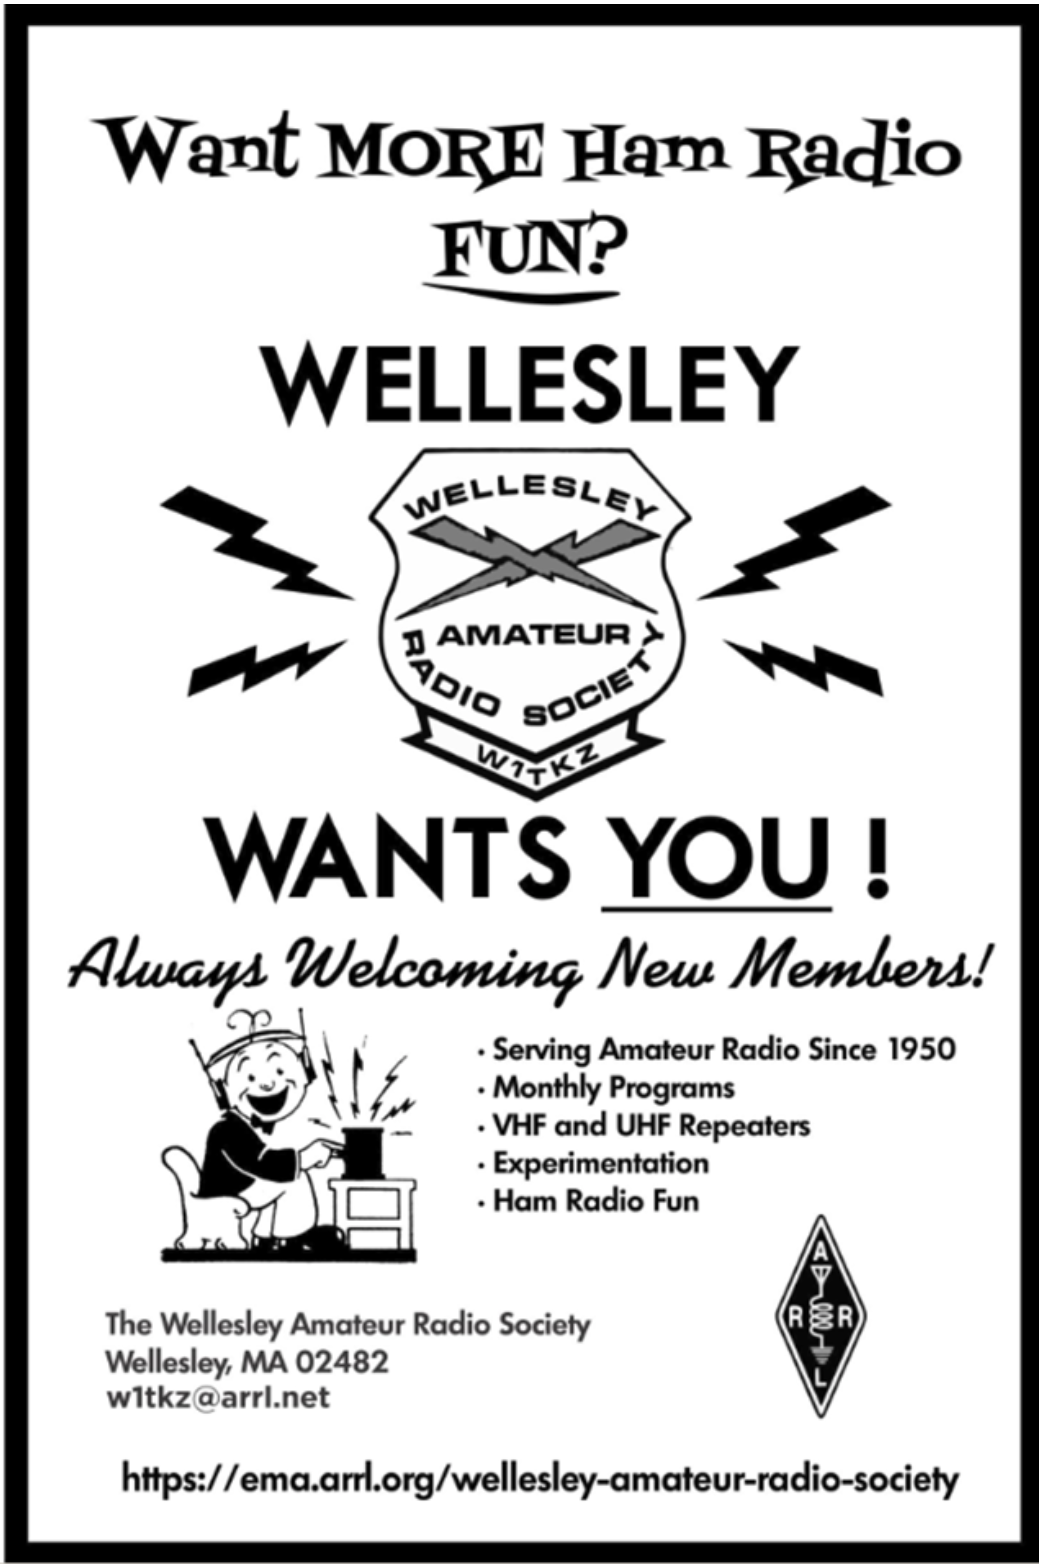 Wellesley Amateur Radio Society ad